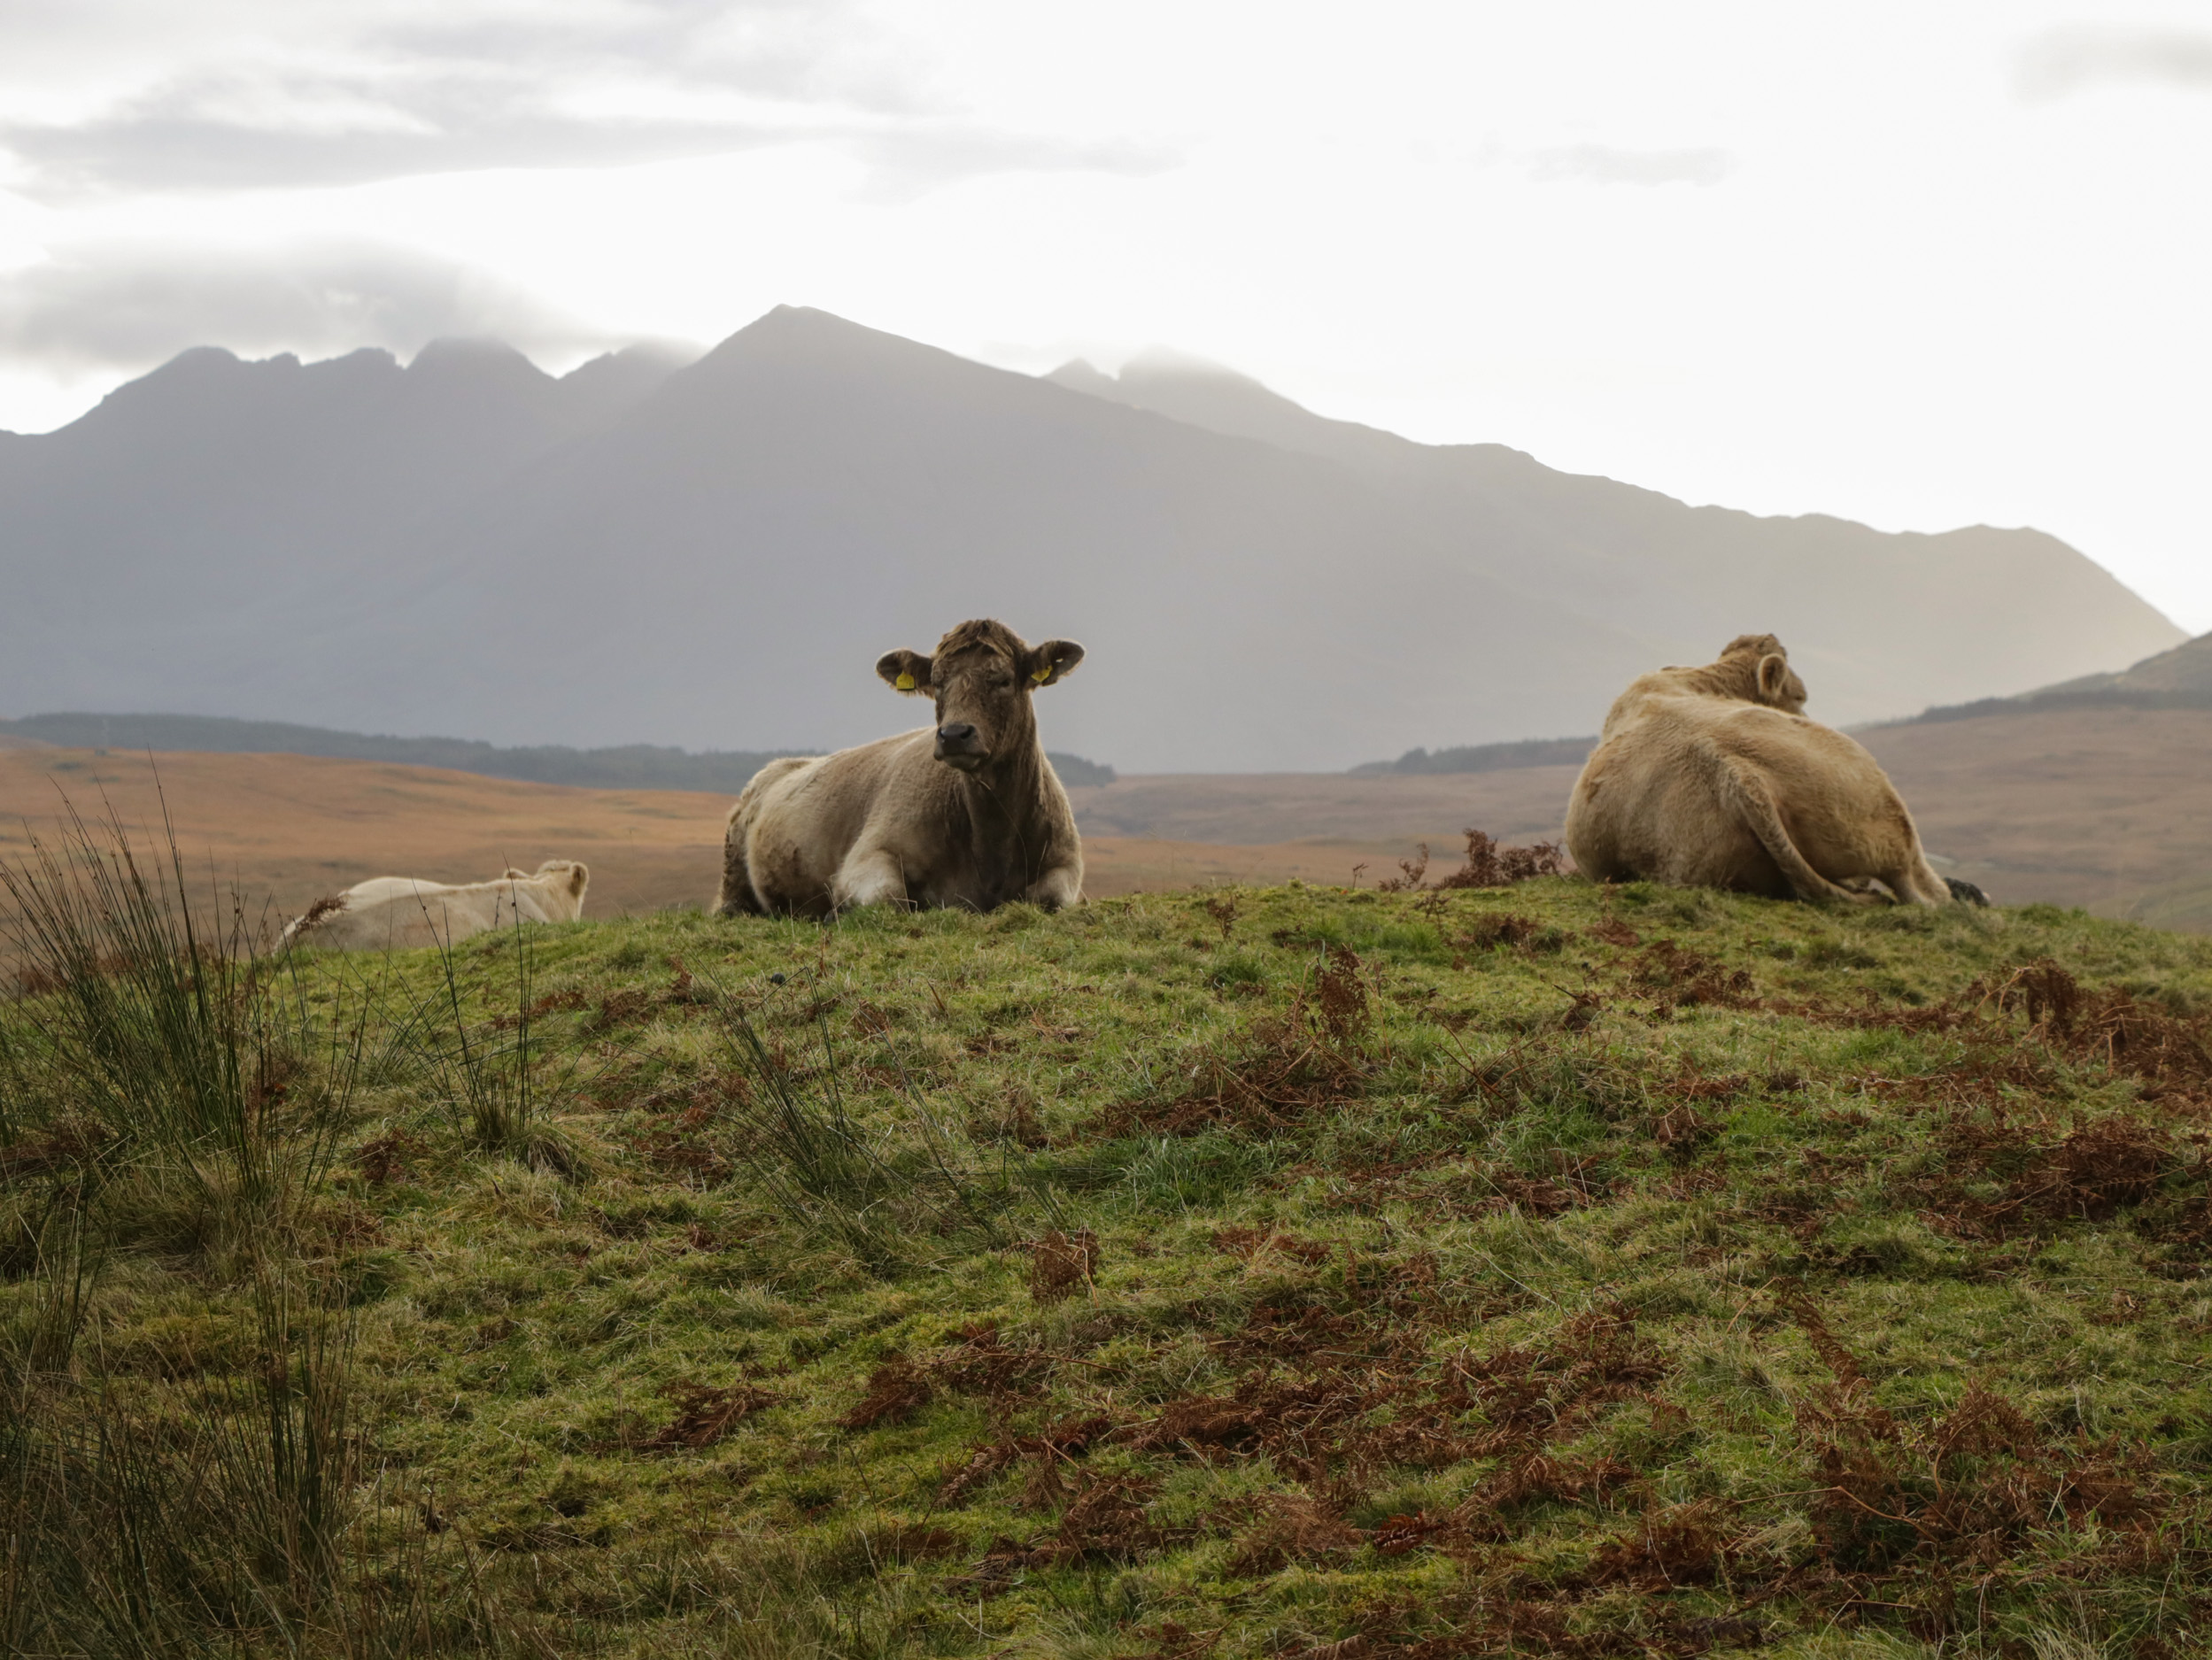 The Barn, Isle of Skye, Highlands